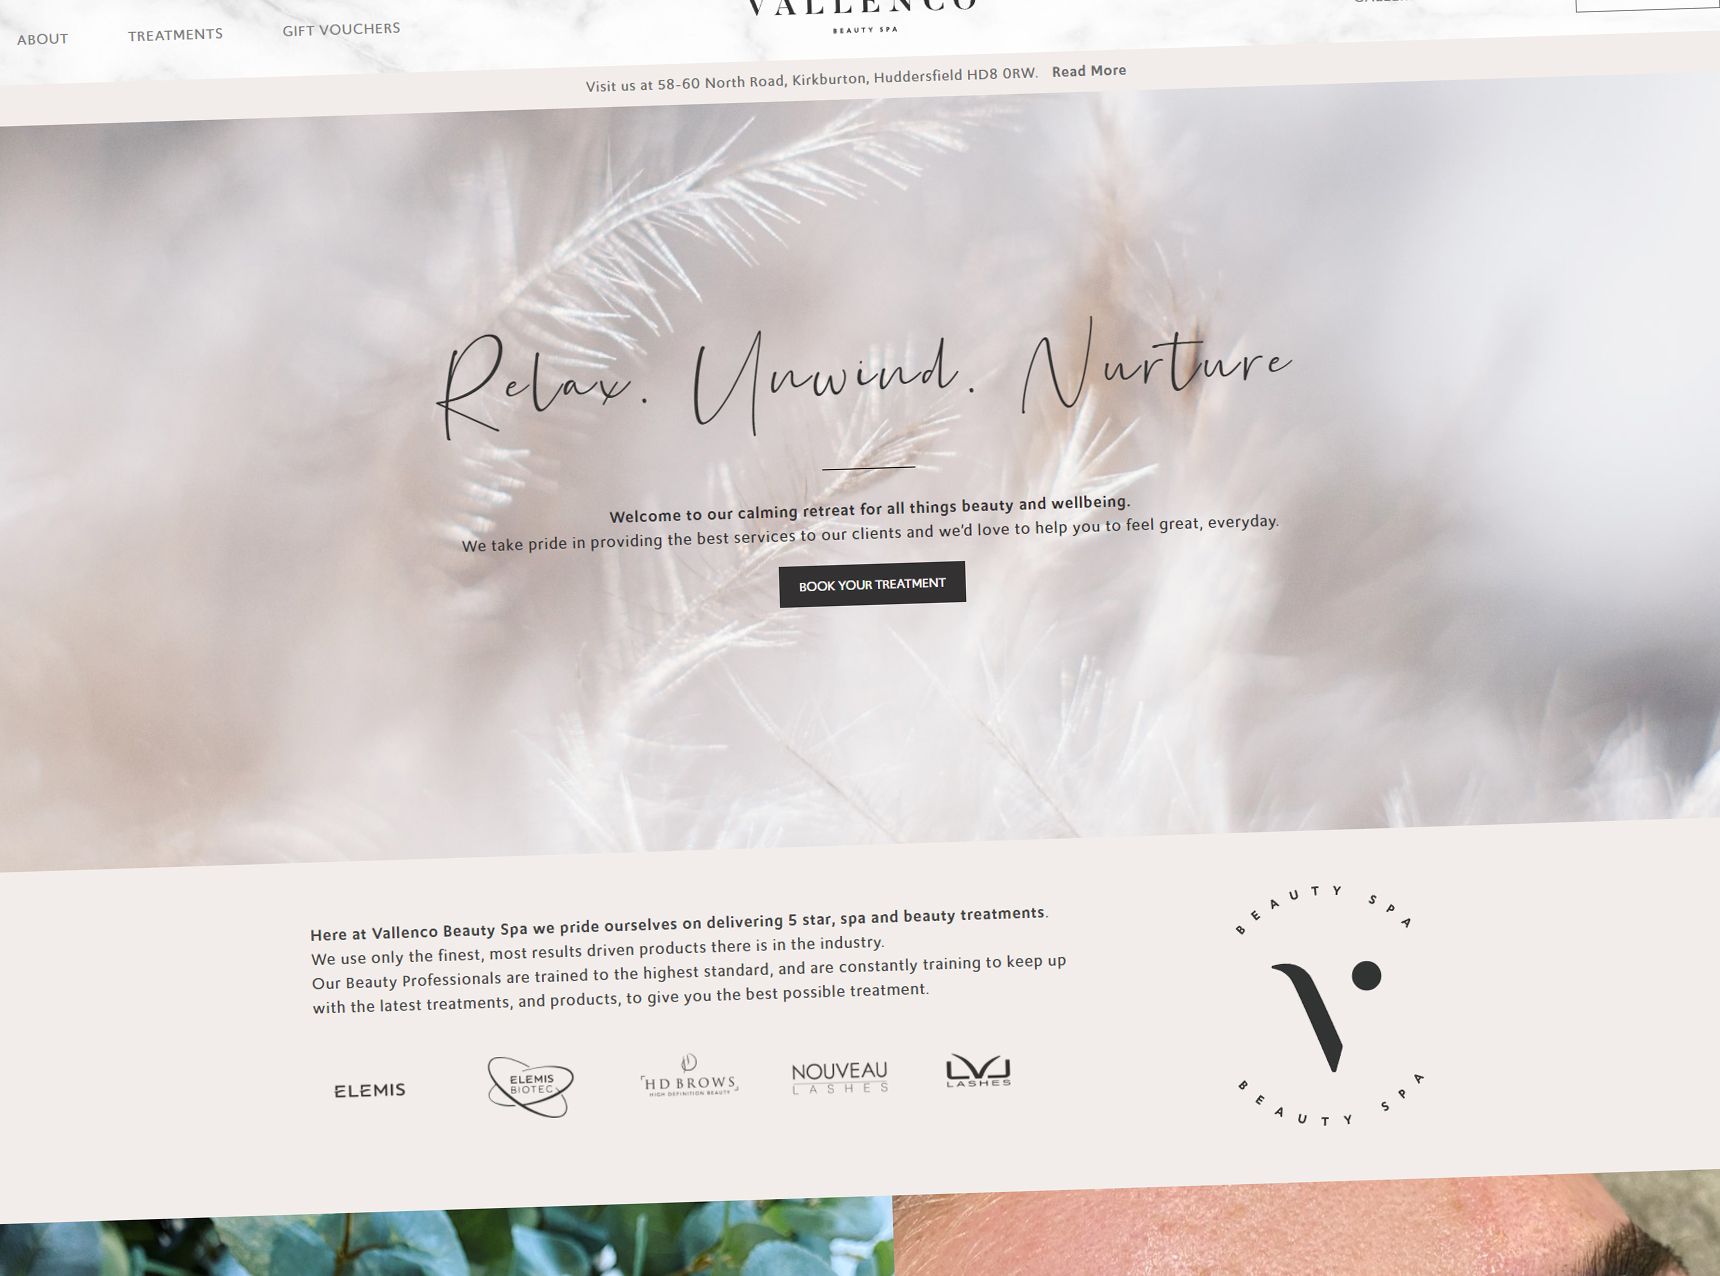 Vallenco Beauty Spa Website Home Page